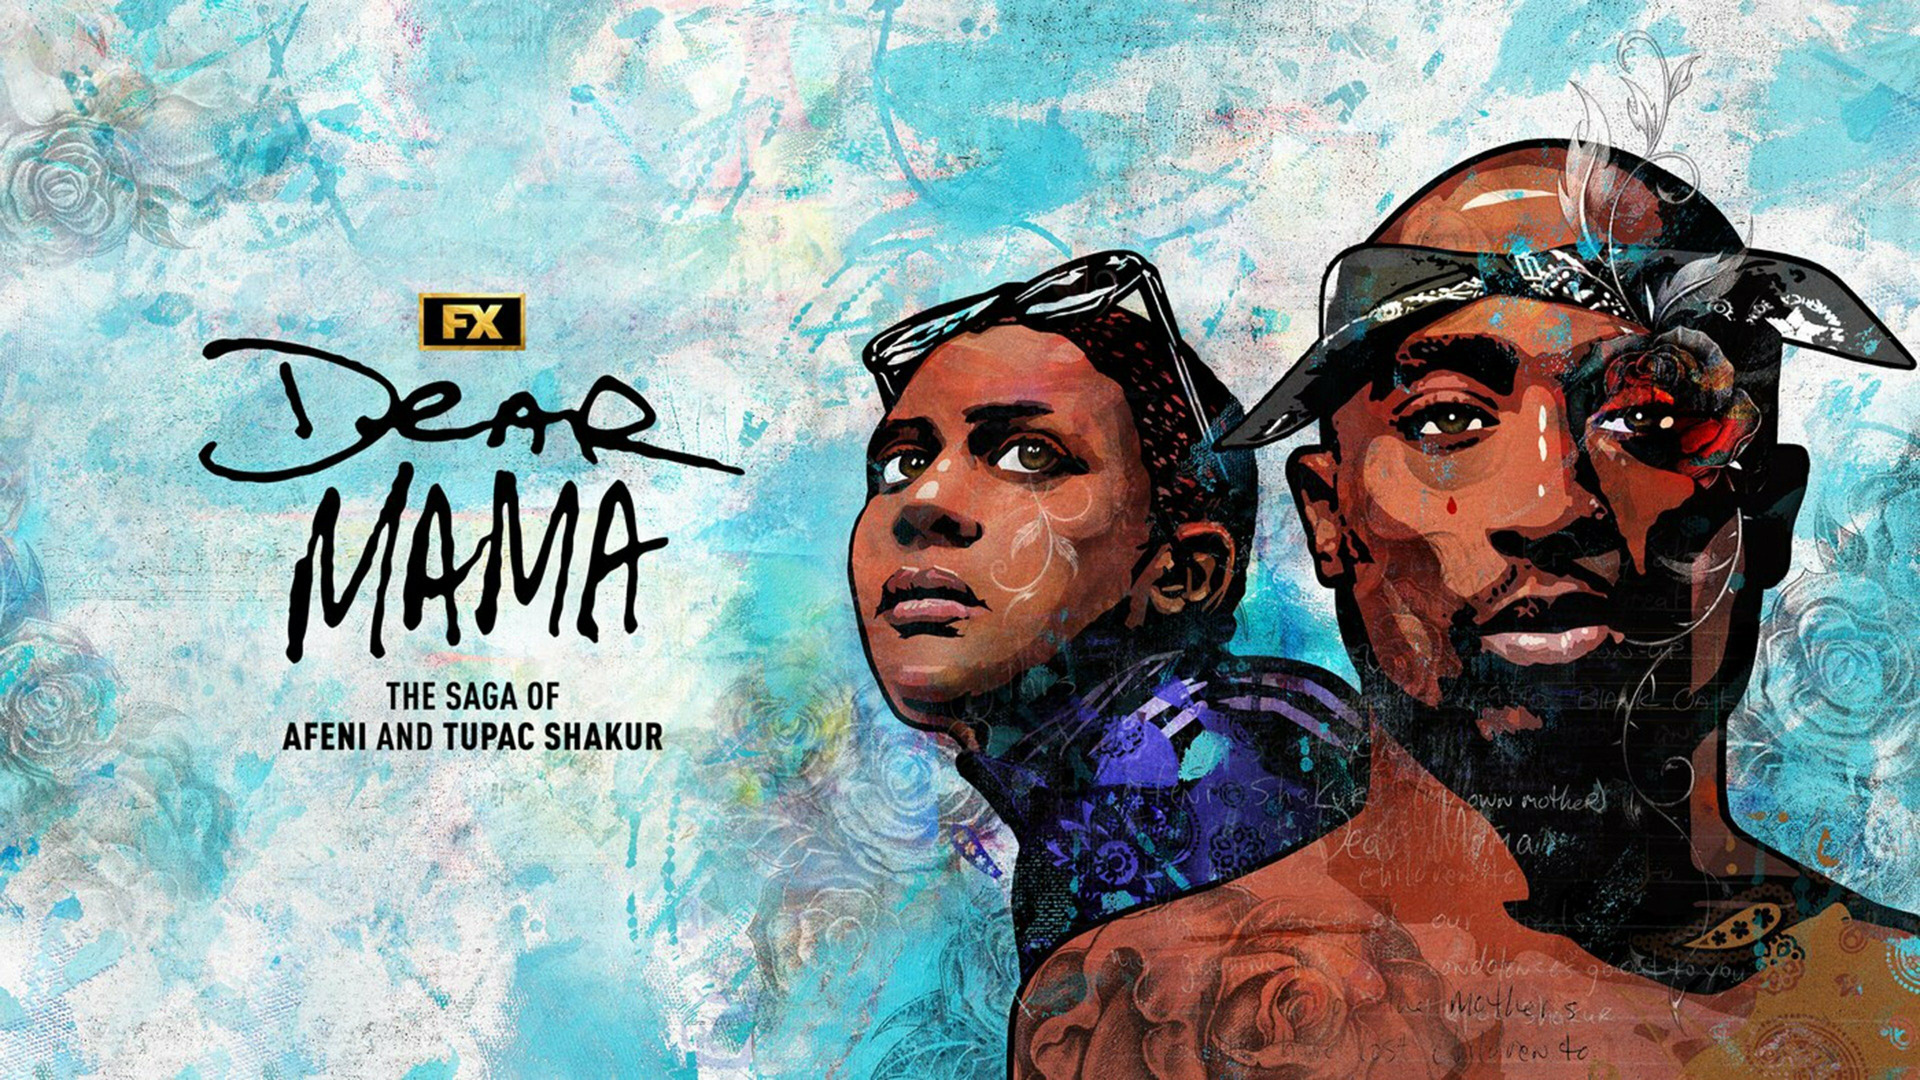 Show Dear Mama: The Saga of Afeni and Tupac Shakur